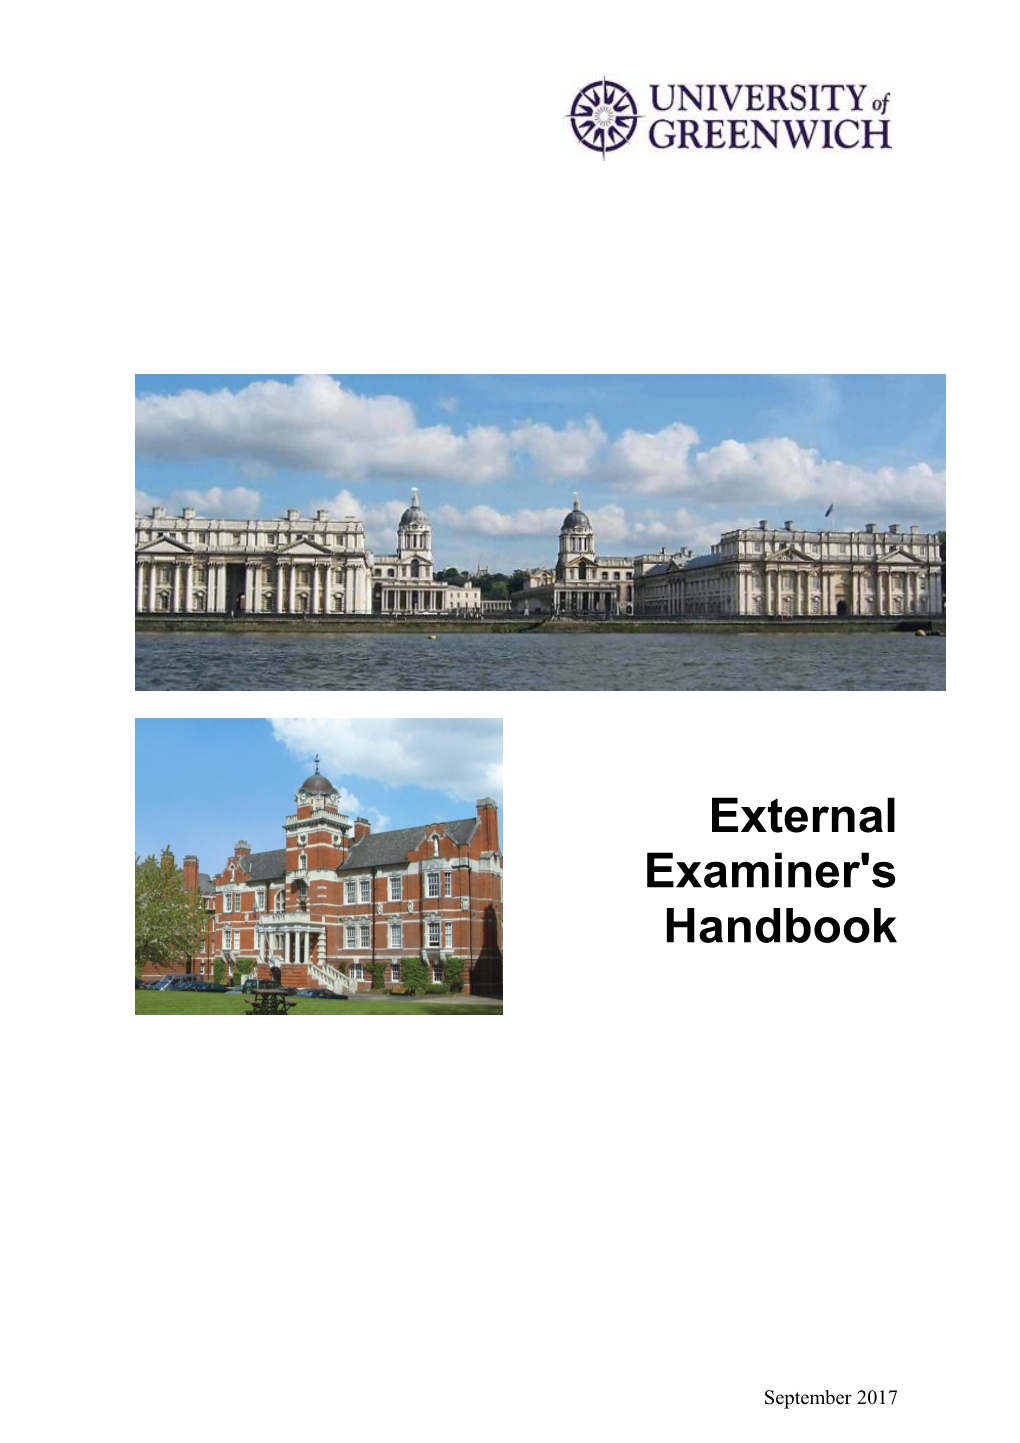 University of Greenwich External Examiners Handbook